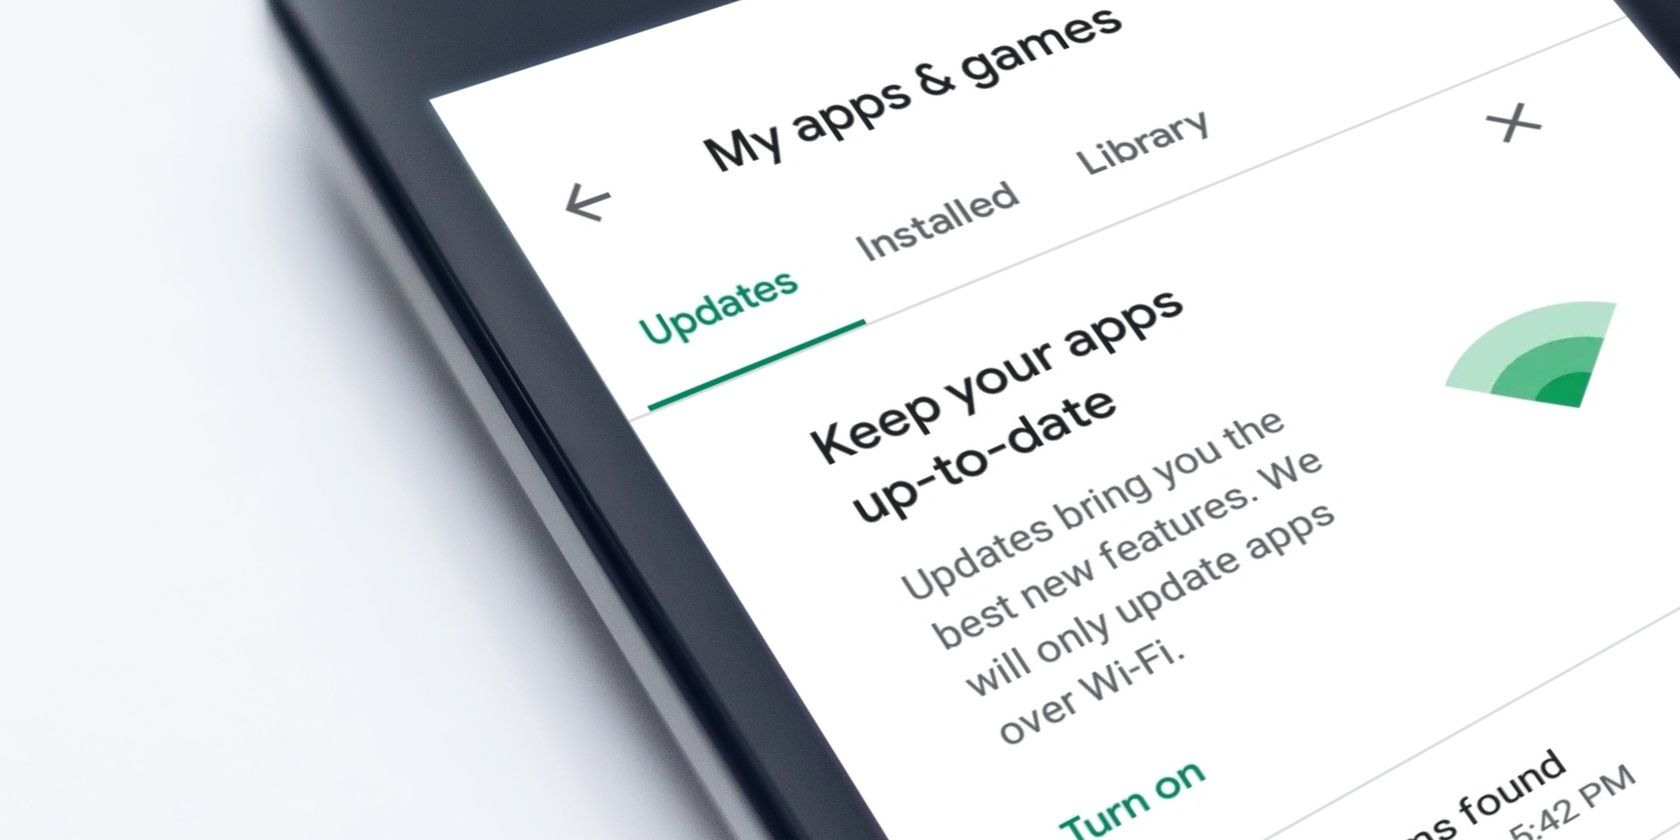 App updates on Google Play Store